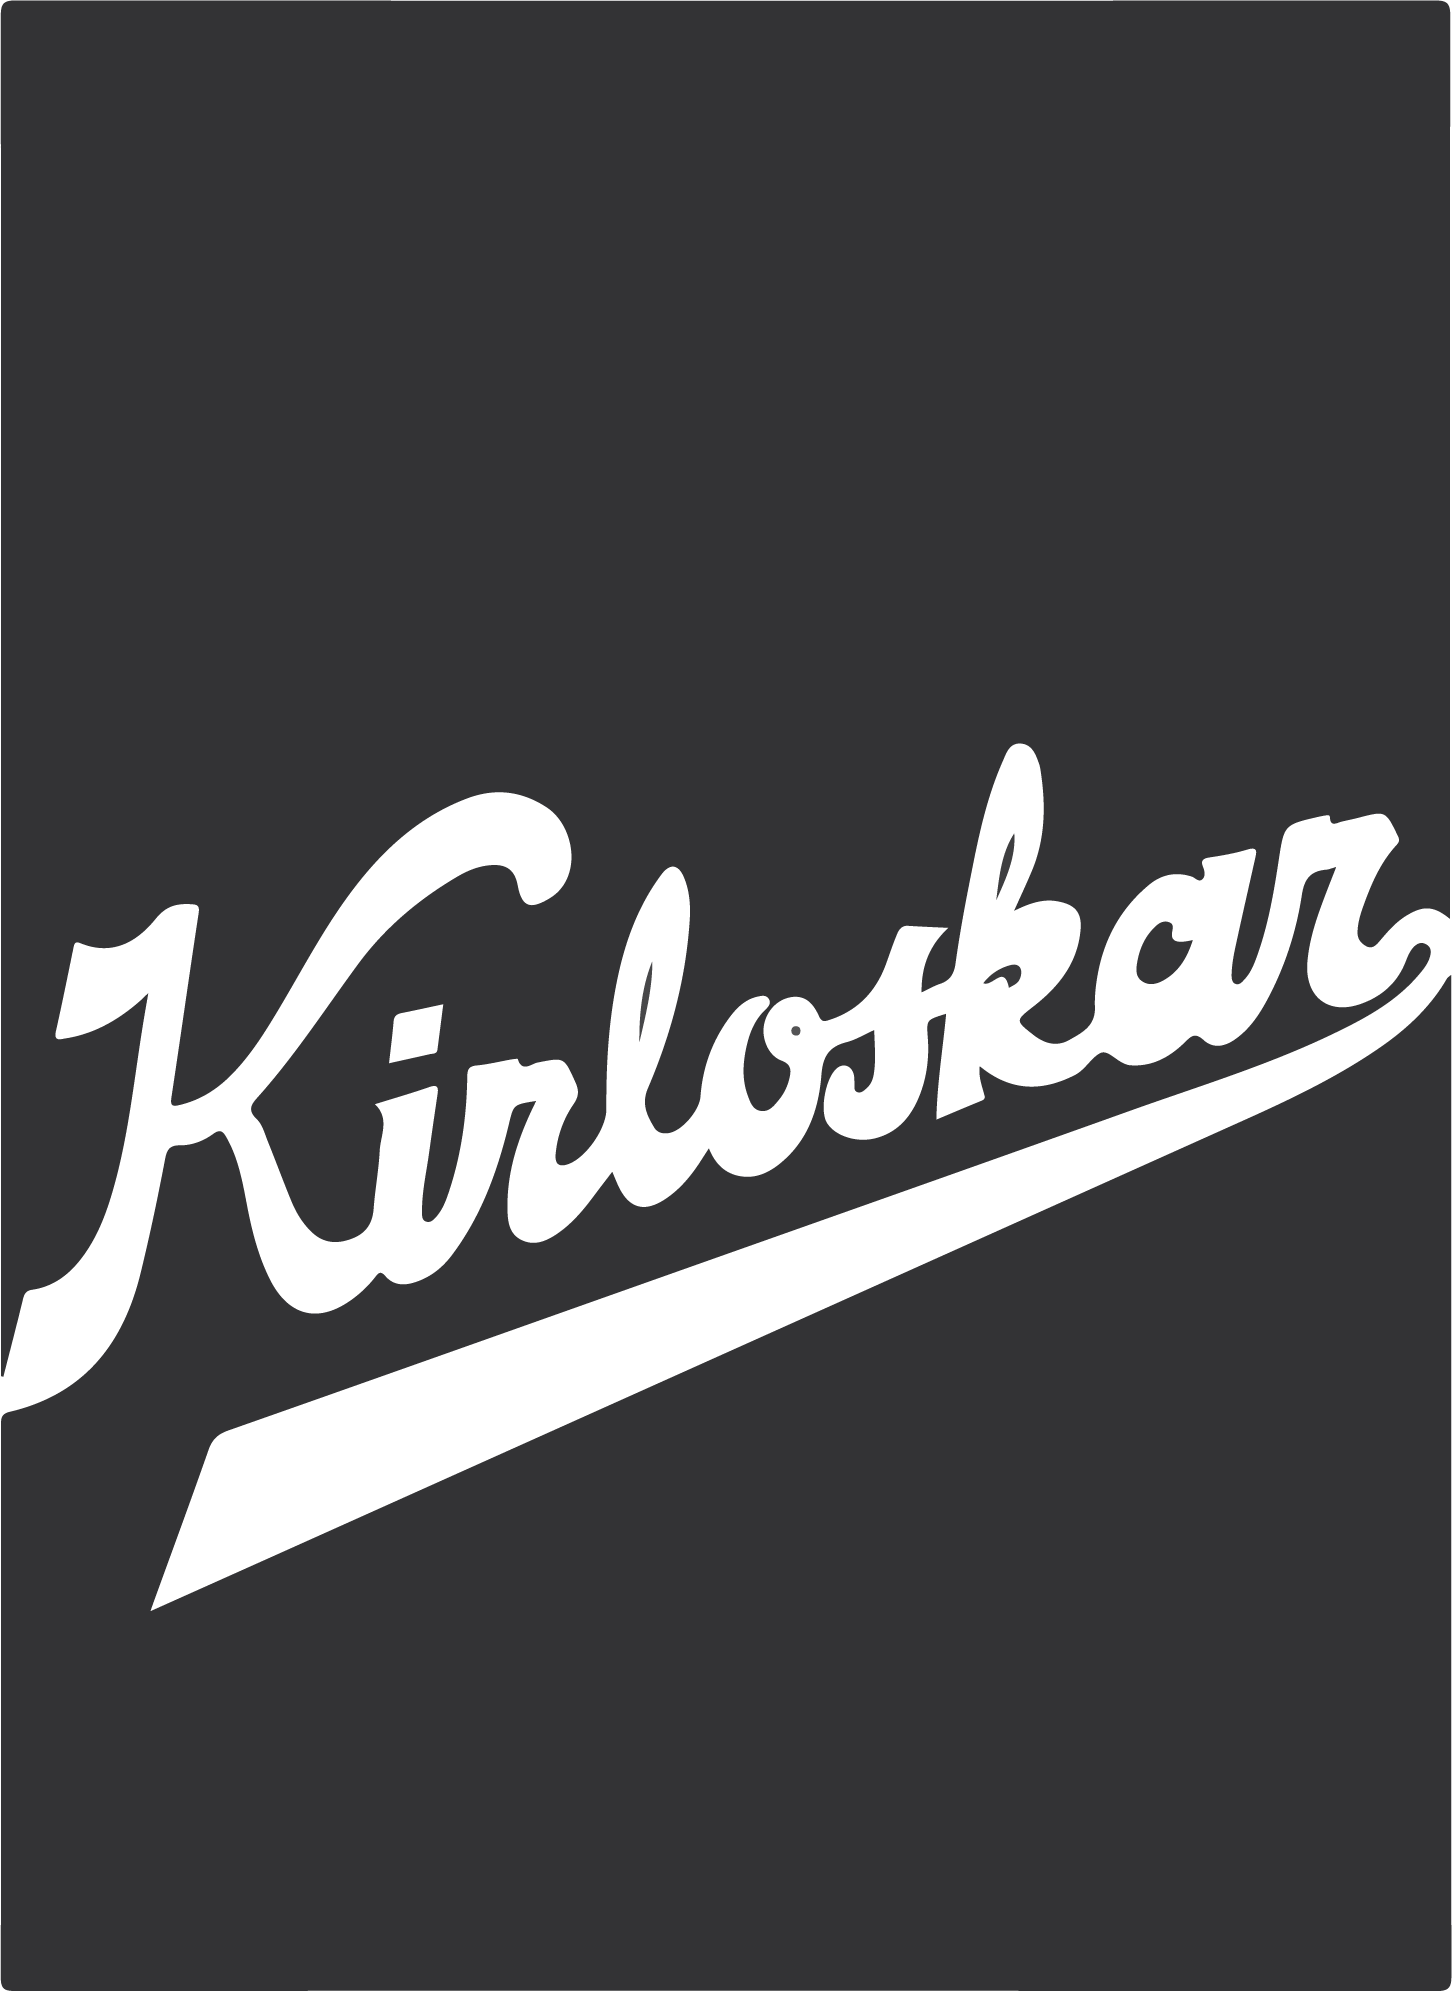 Kirloskar Ferrous Industries logo (PNG transparent)